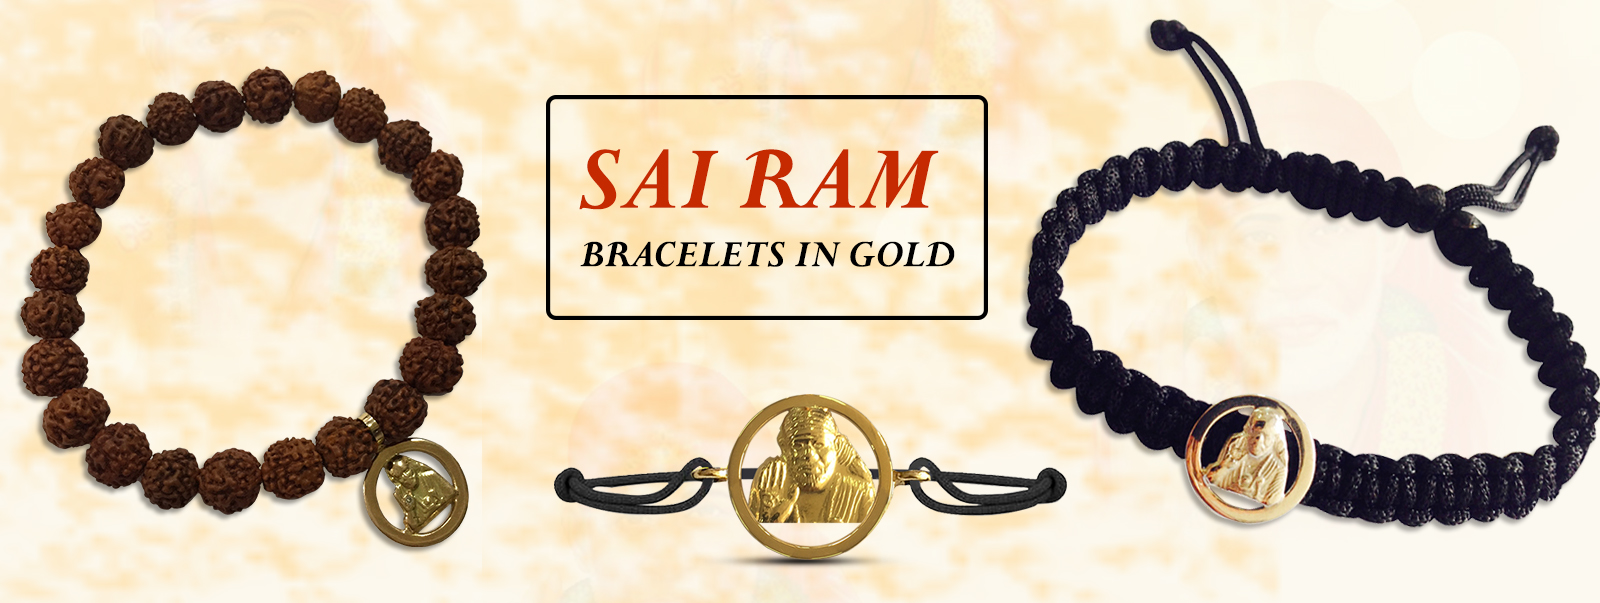 Sai Ram Bracelets silver gold online